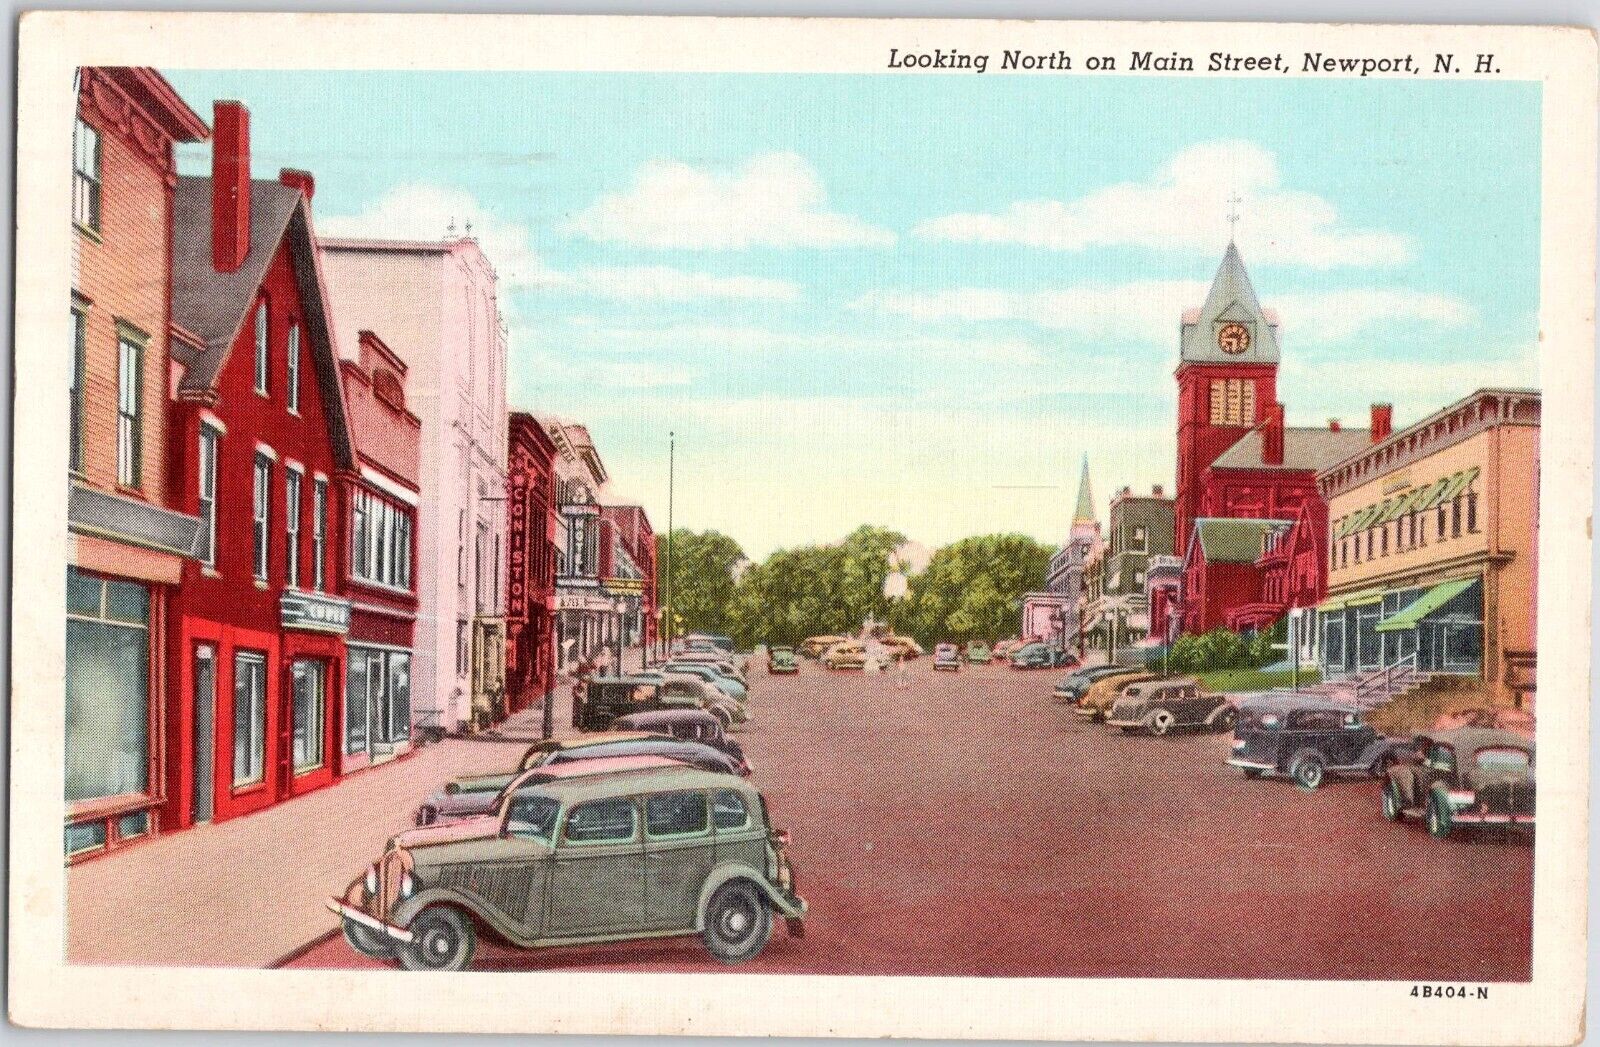 1947 Newport, New Hampshire Looking North on Main Street Vintage Postcard